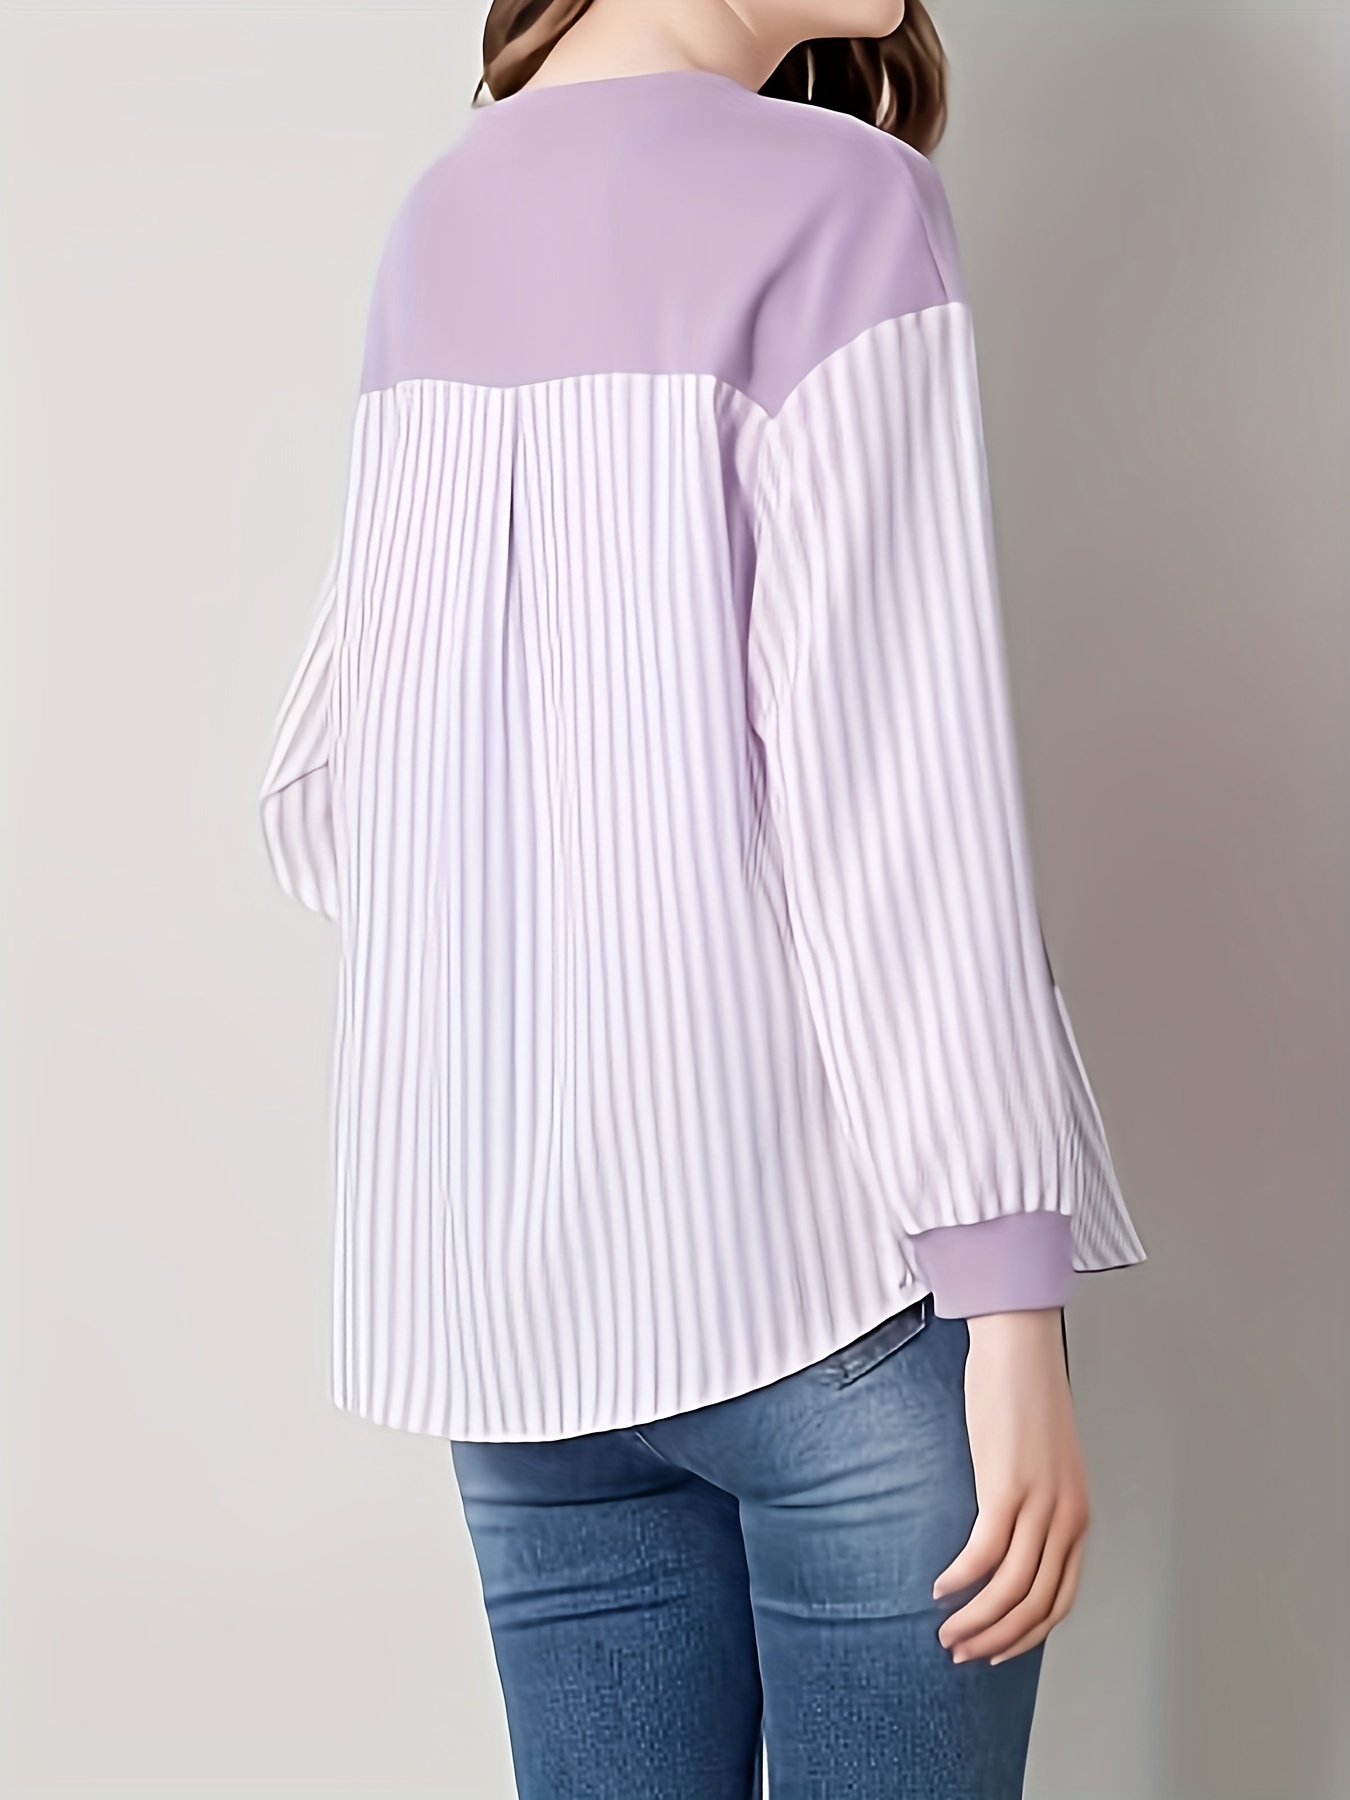 contrast striped crew neck blouse elegant long sleeve split side blouse for spring fall womens clothing details 1